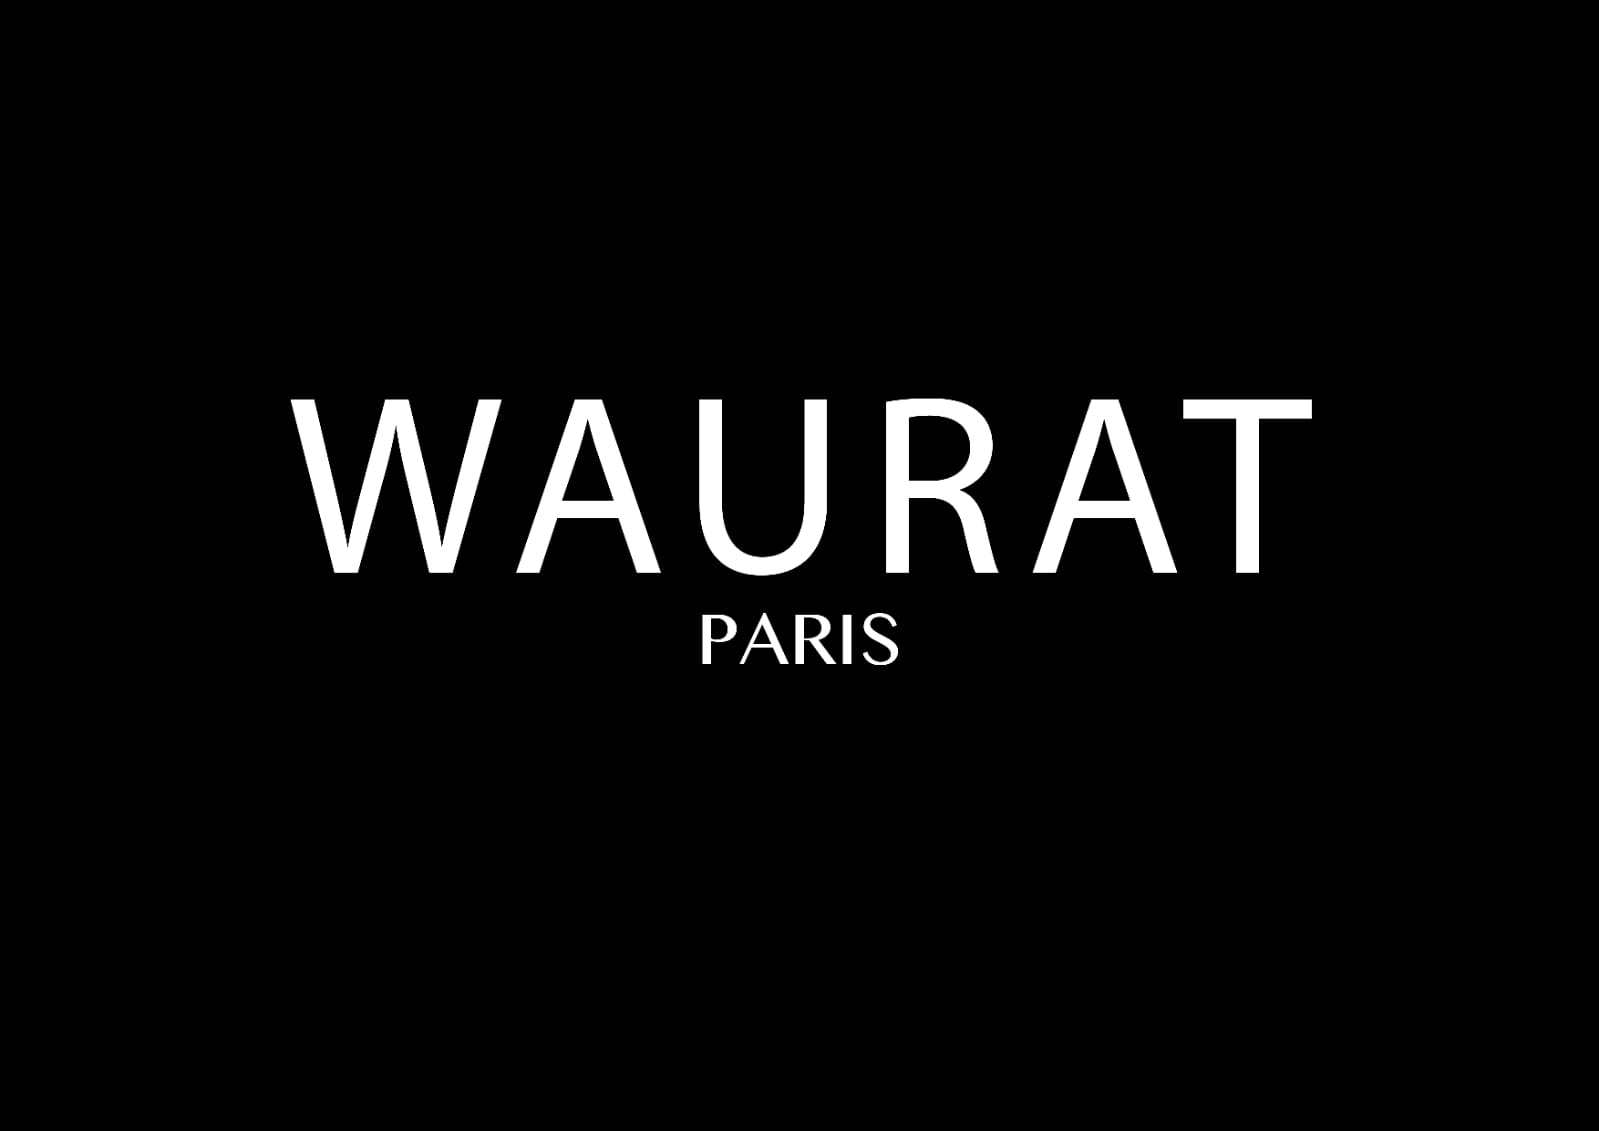 WAURAT PARIS